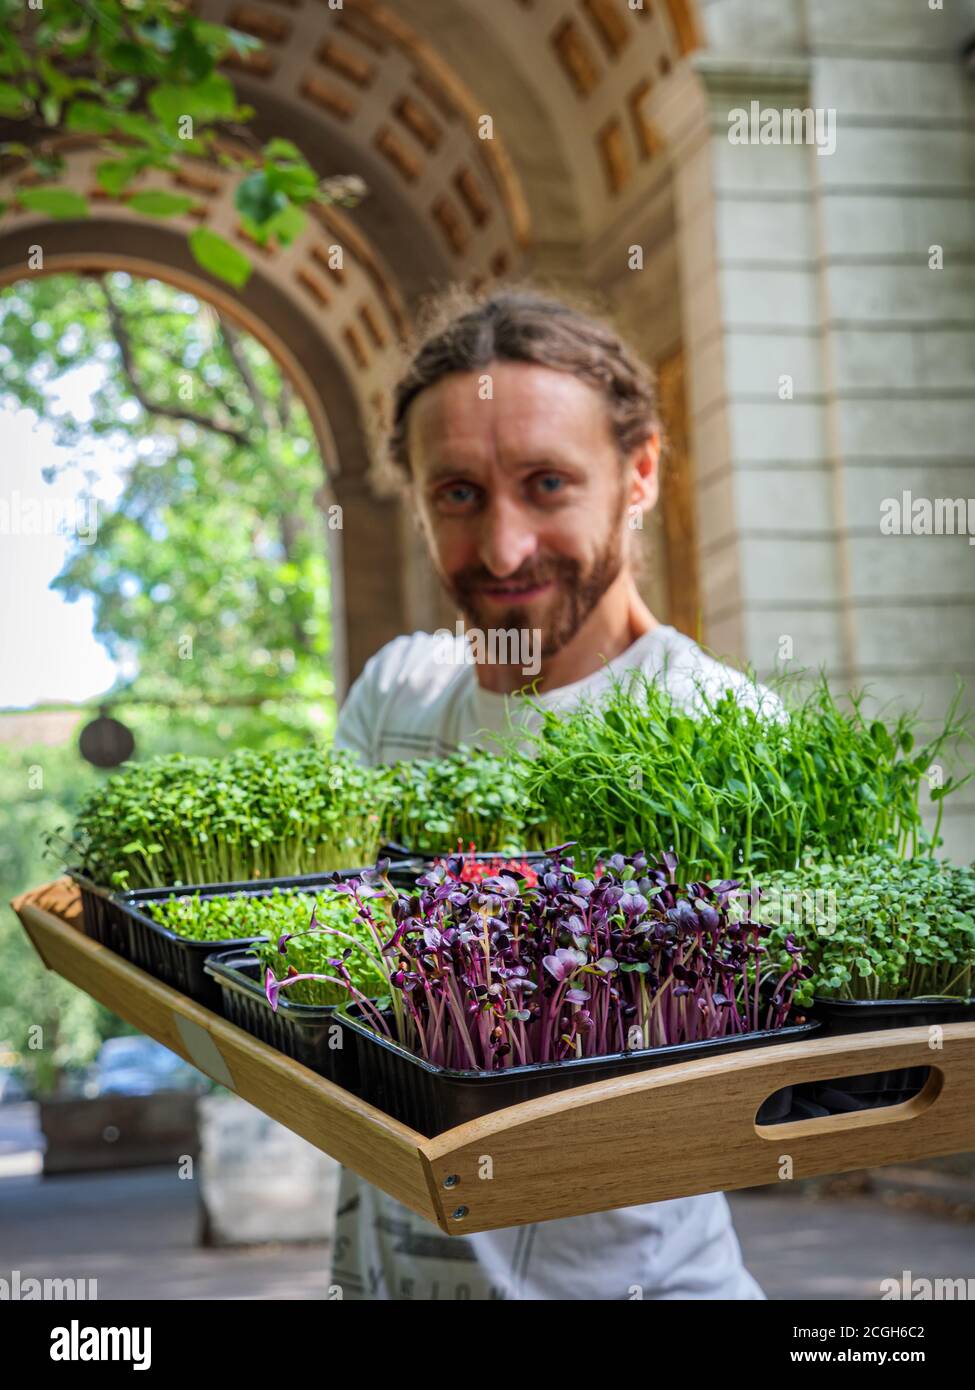 Microgreen. Bearded guy holding a tray with various microgreens Stock Photo